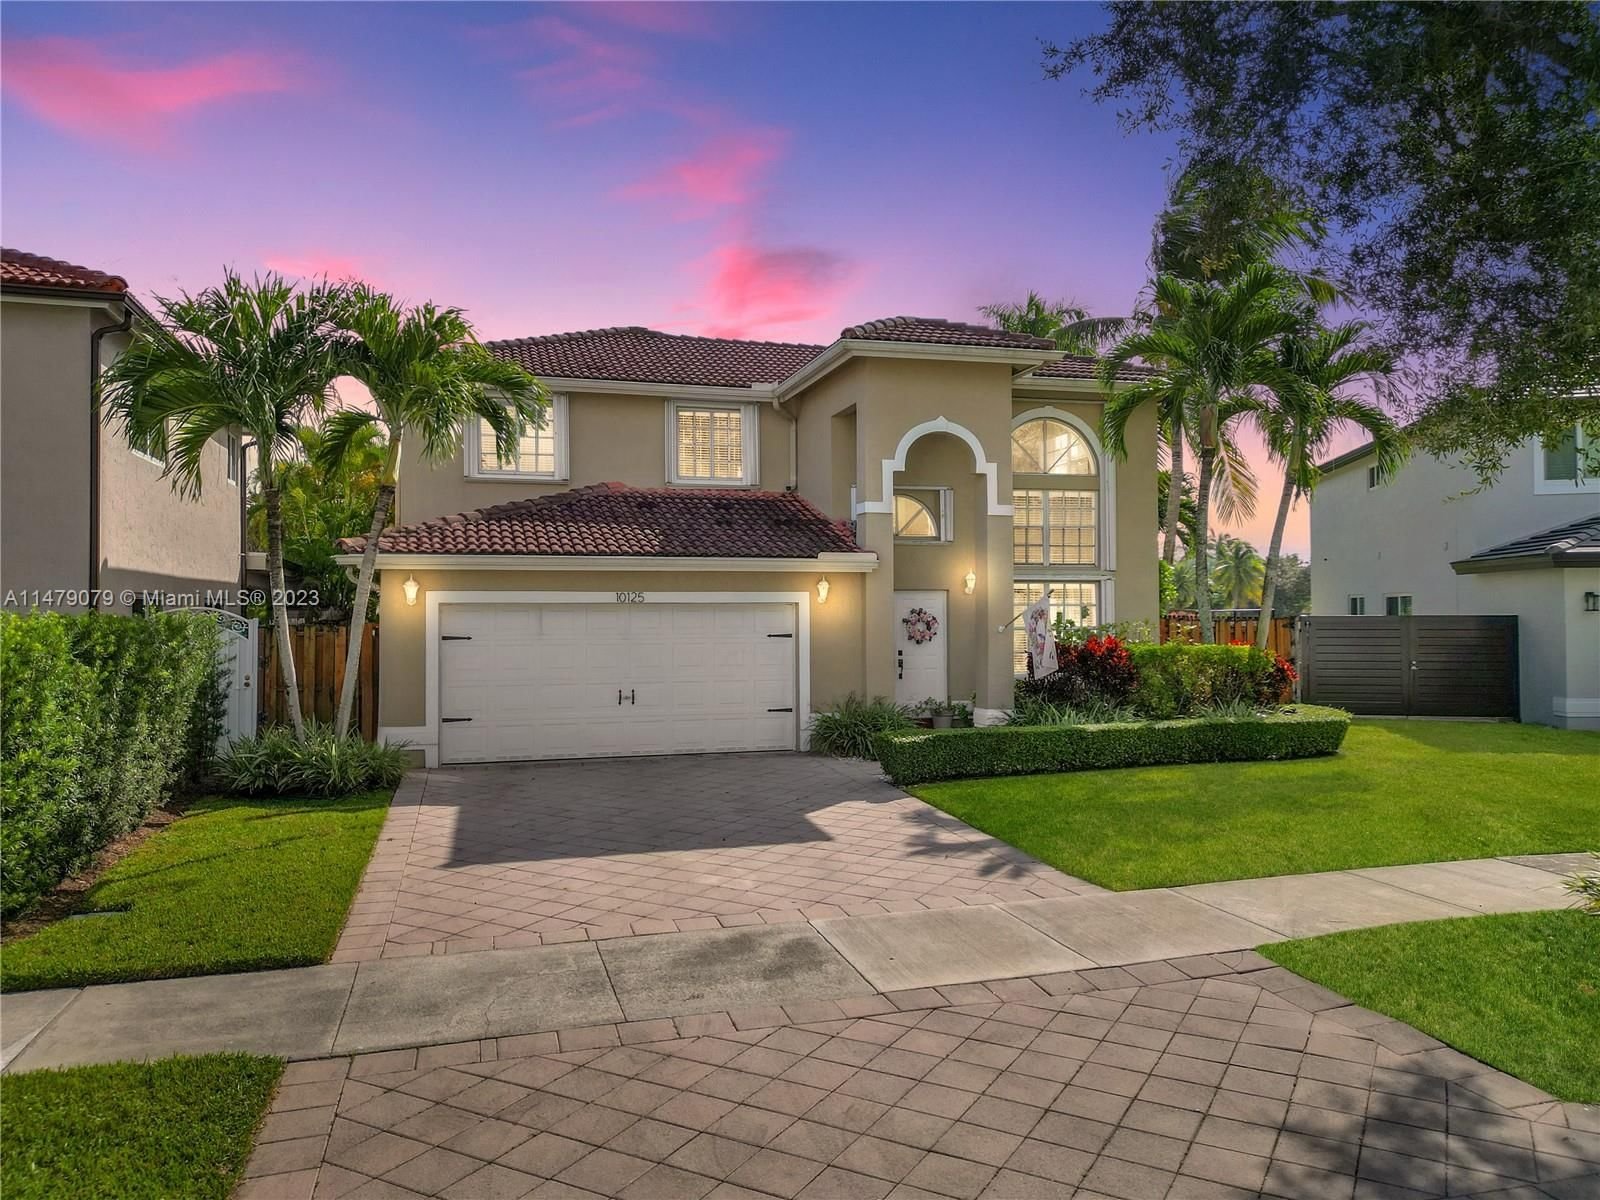 Real estate property located at 10125 165th Ct, Miami-Dade County, Miami, FL